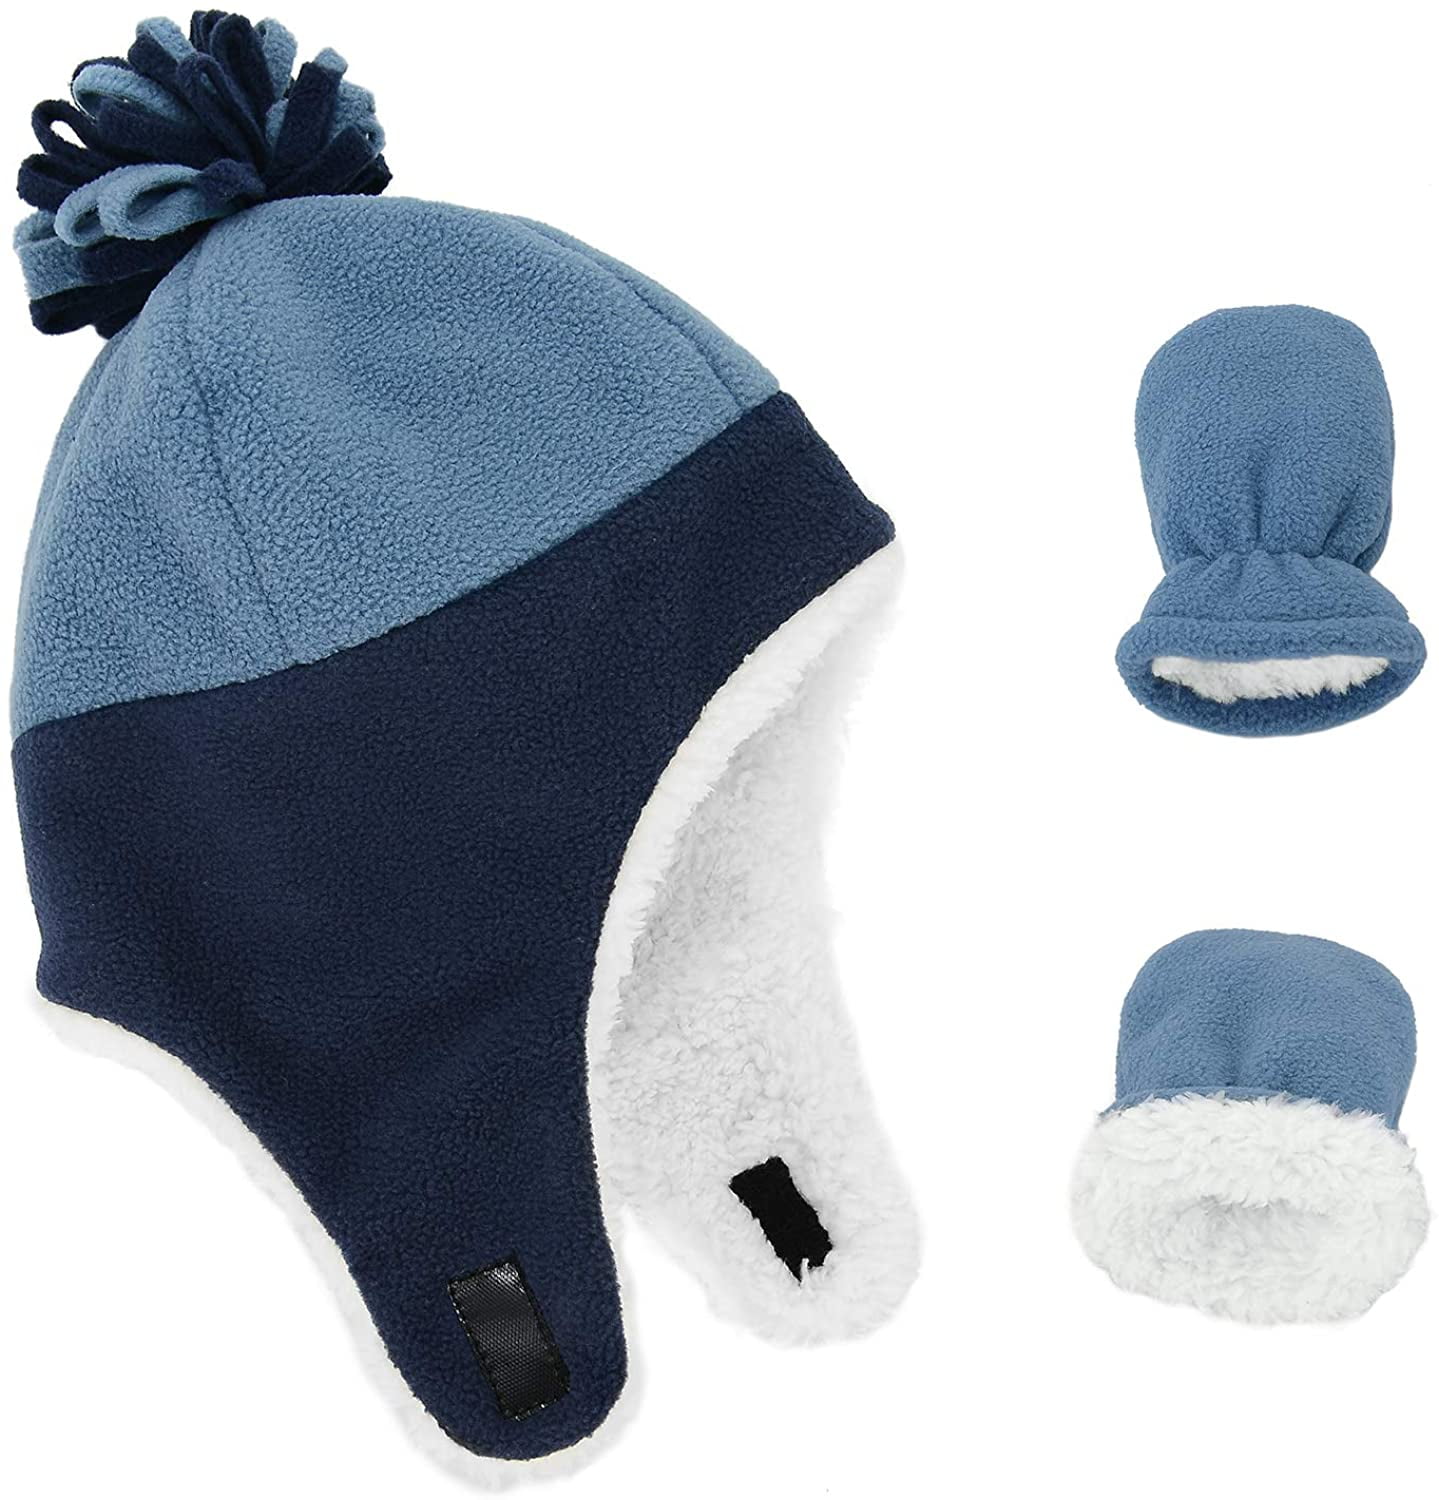 Baby Toddler Kids Winter Hats and Gloves Set Knit Earflap Beanie Warm Fleece Cap for Boy Girl 